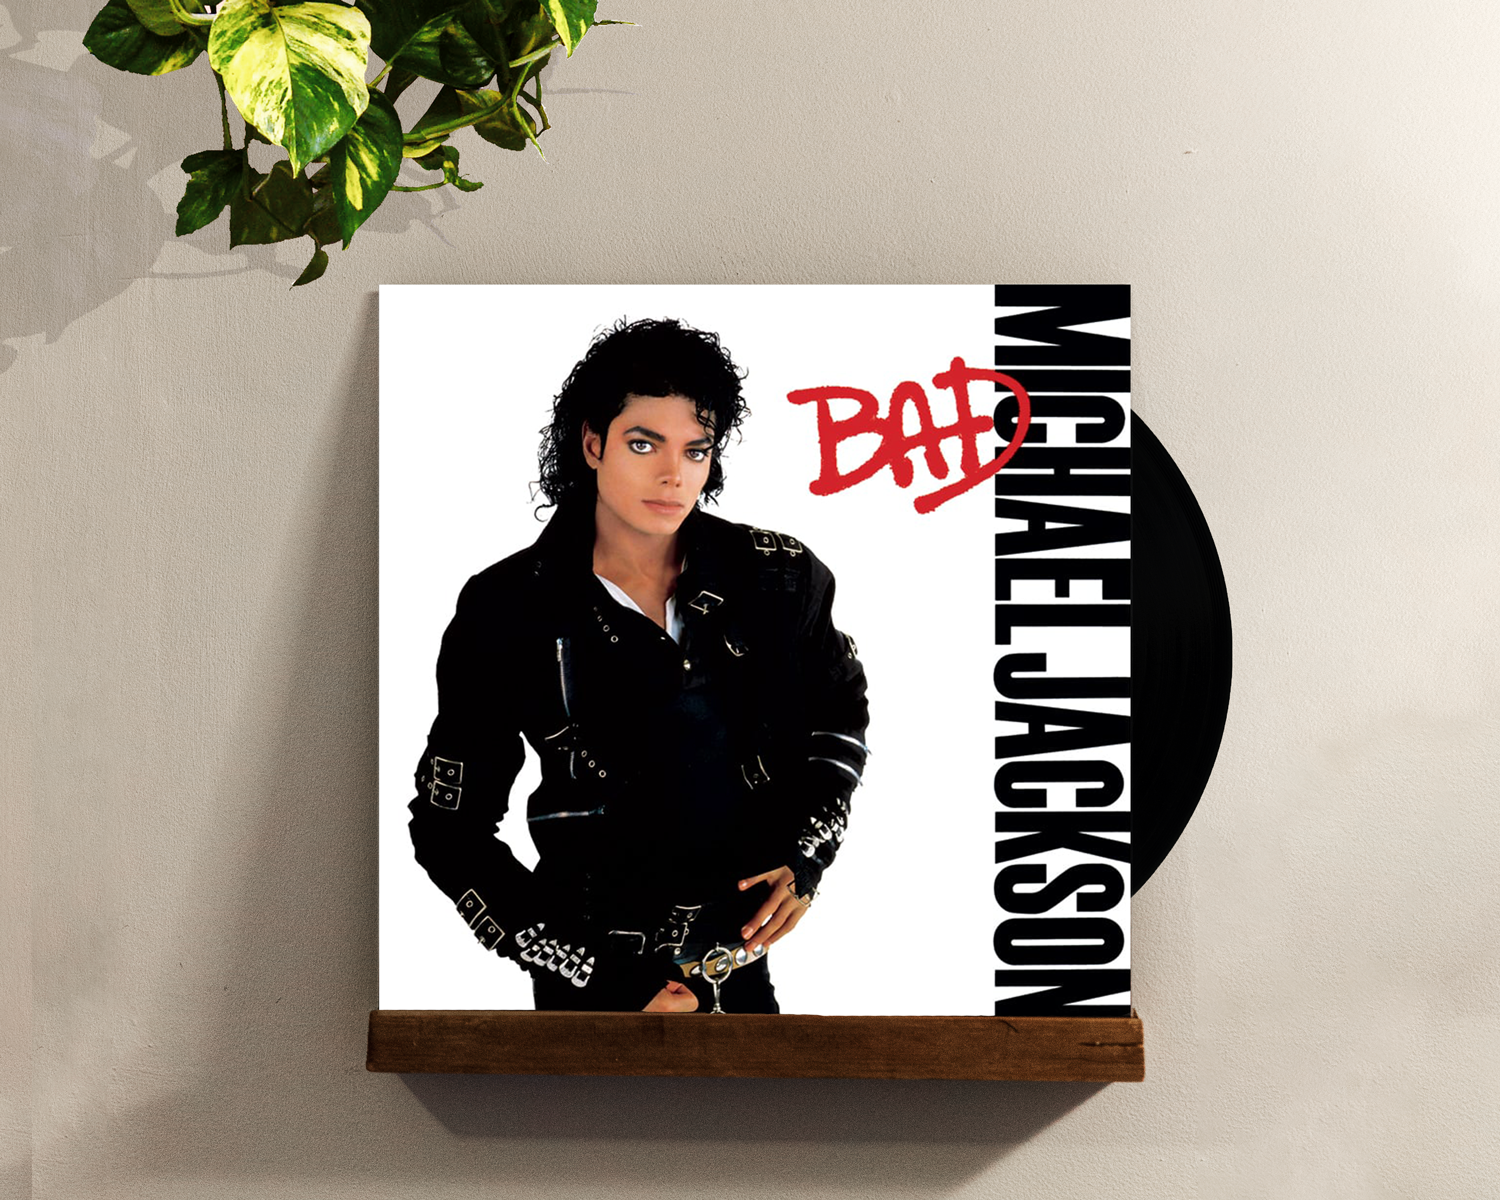 Michael Jackson - BAD - My Record Collection - Vinyl